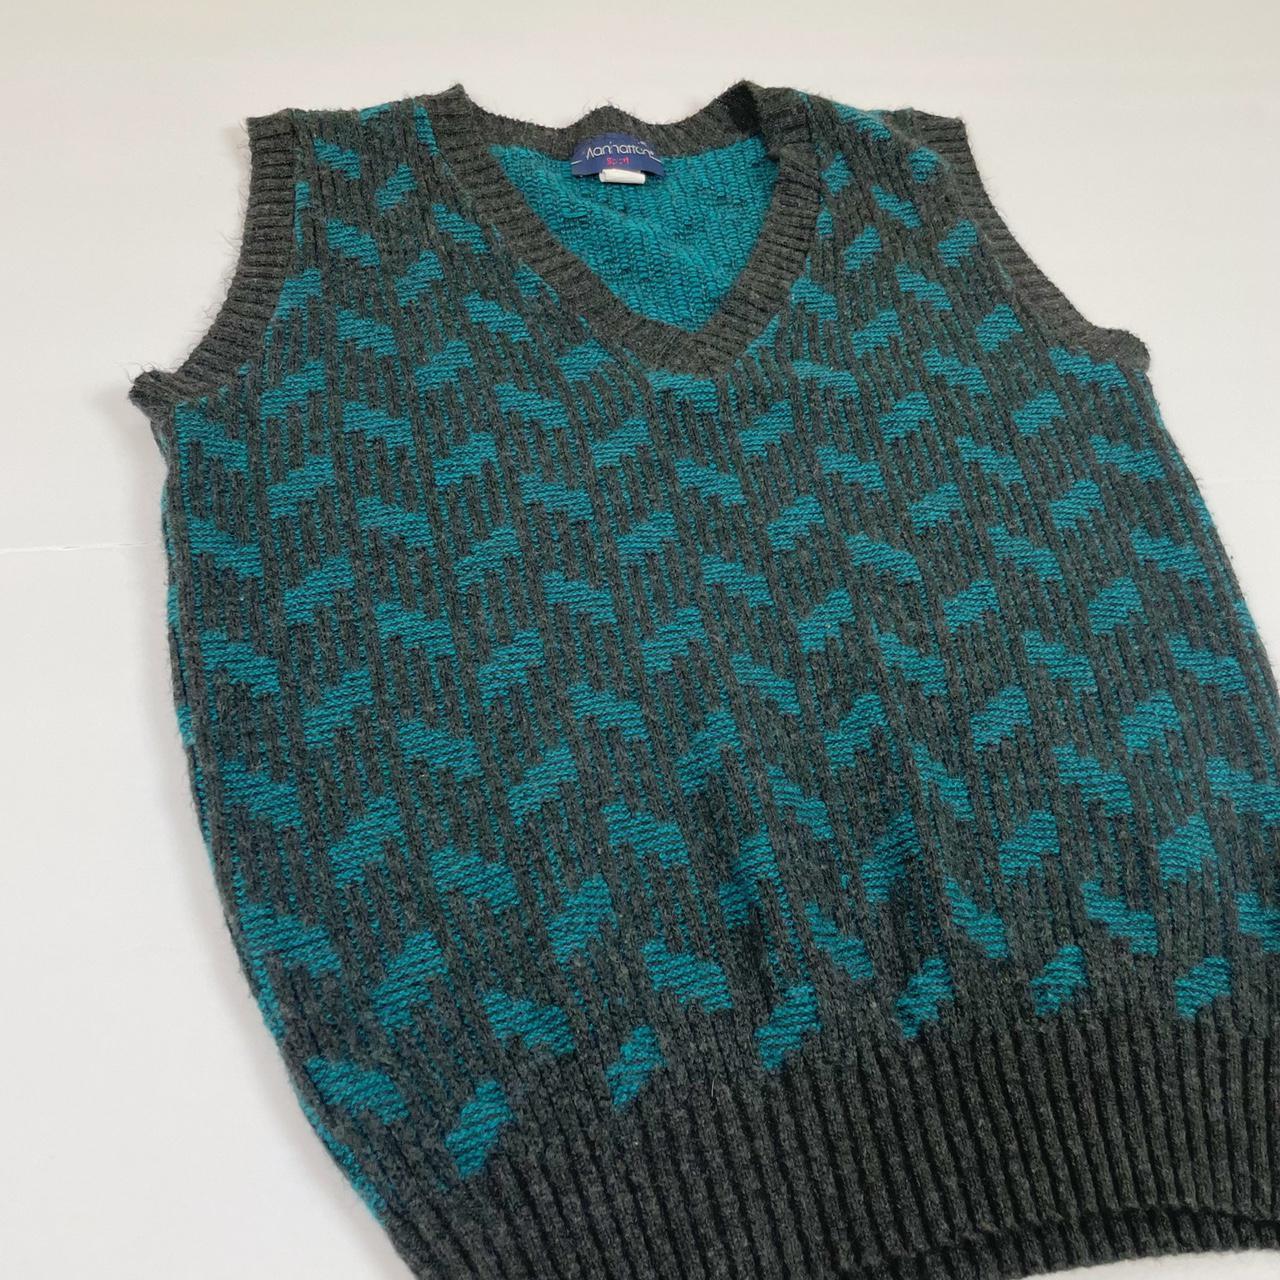 Product Image 1 - Manhattan Grey/Teal Sweater Vest
Sleeveless sweater